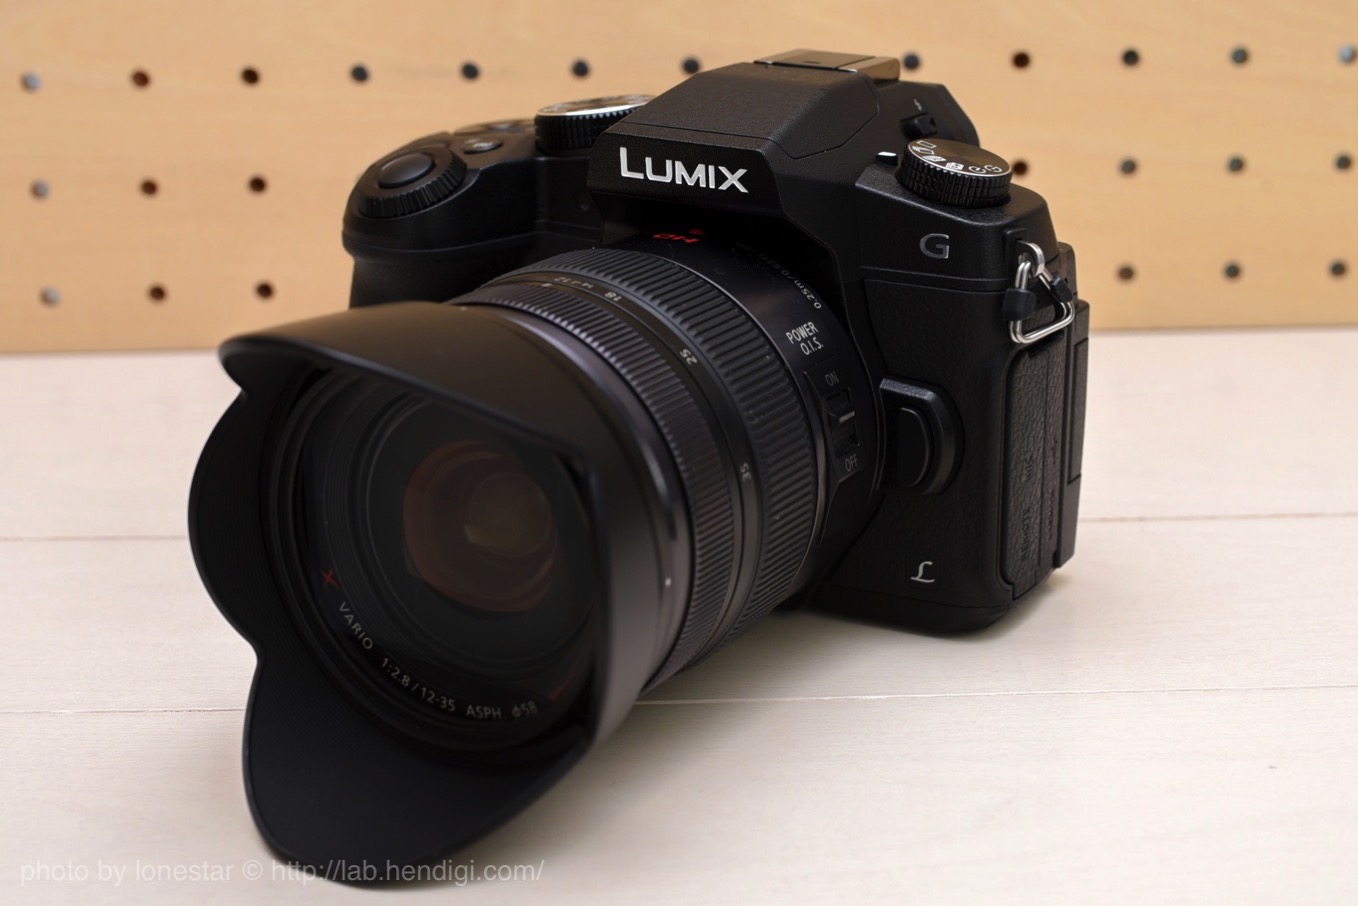 LUMIX G X VARIO 12-35mm F2.8